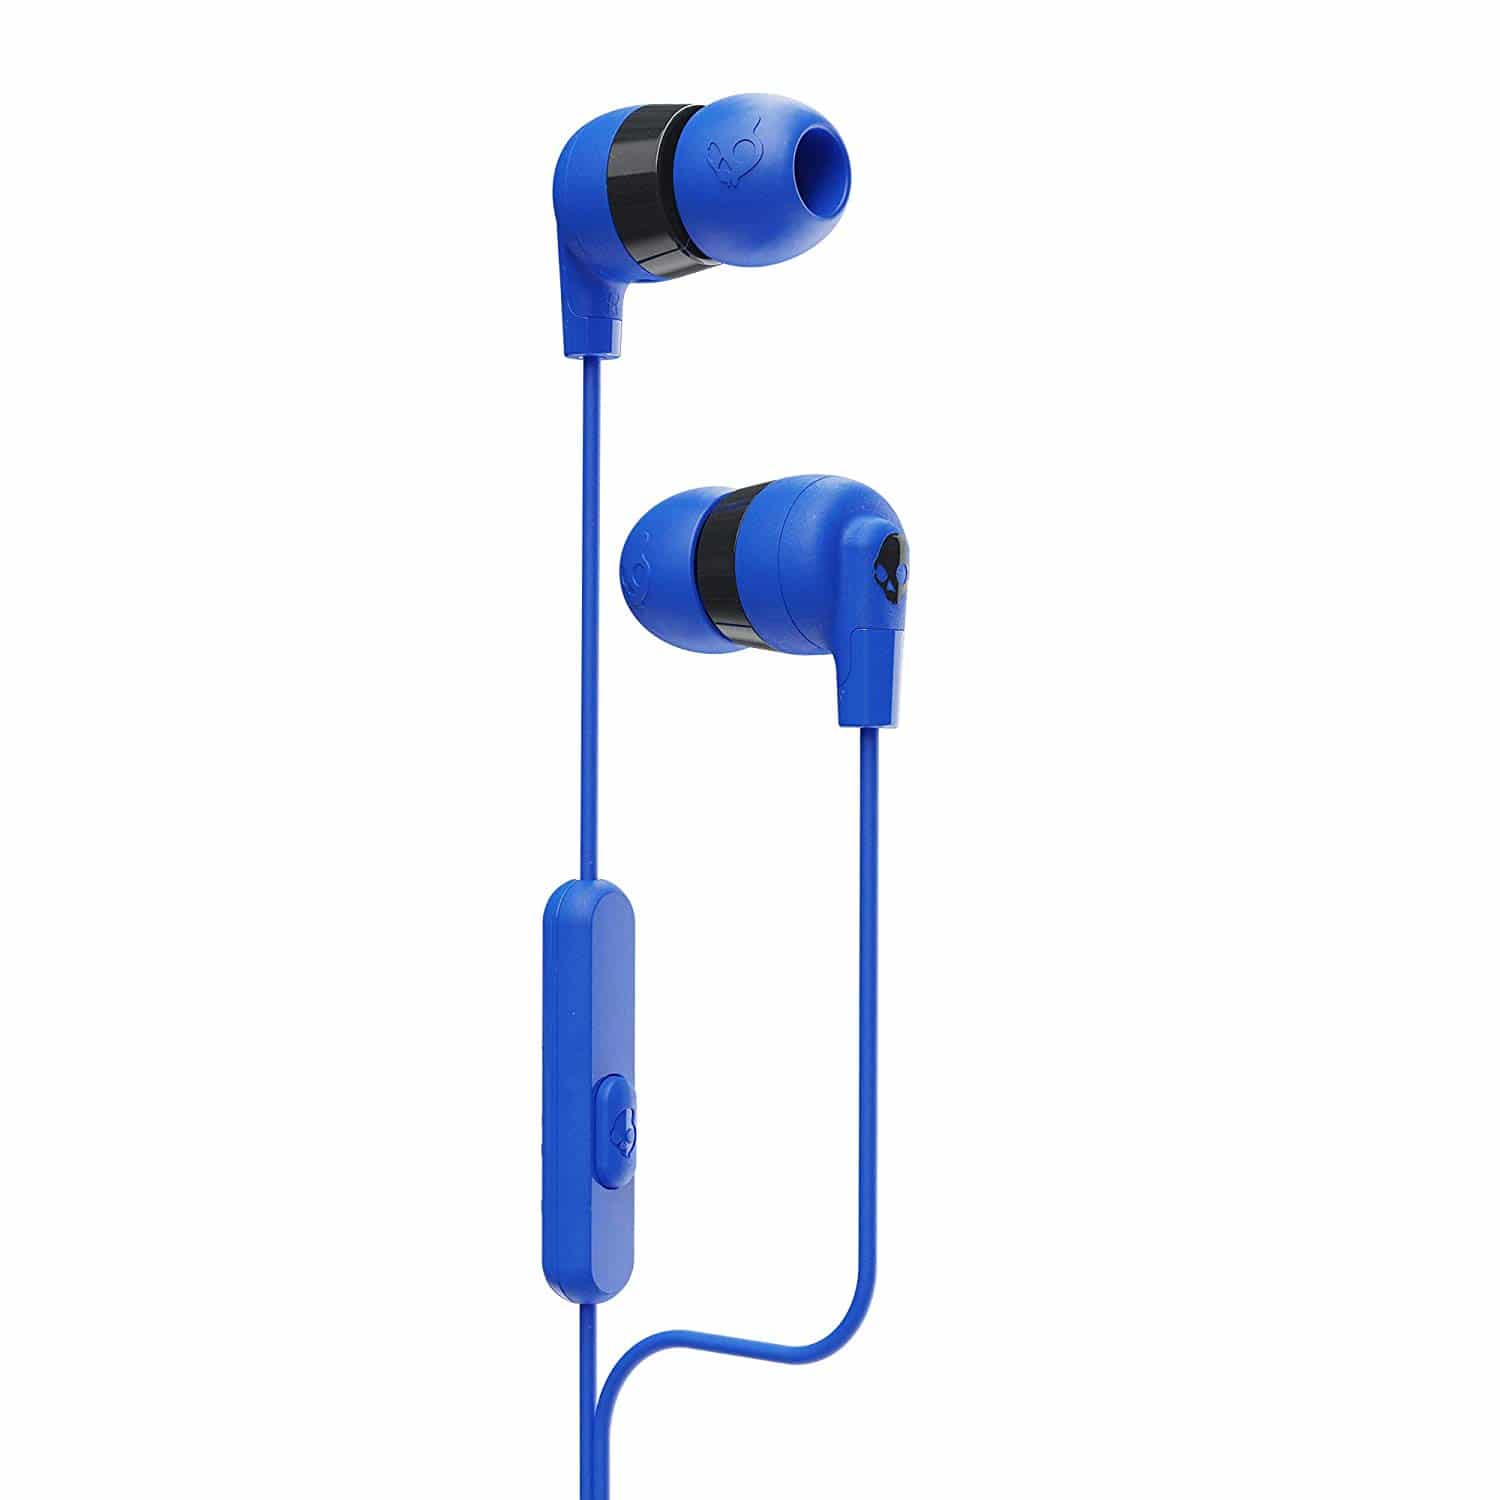 Skullcandy Ink’d Plus In-Ear Earbud – Cobalt Blue Audio  |  Earbuds  |  Wired Earbuds  |